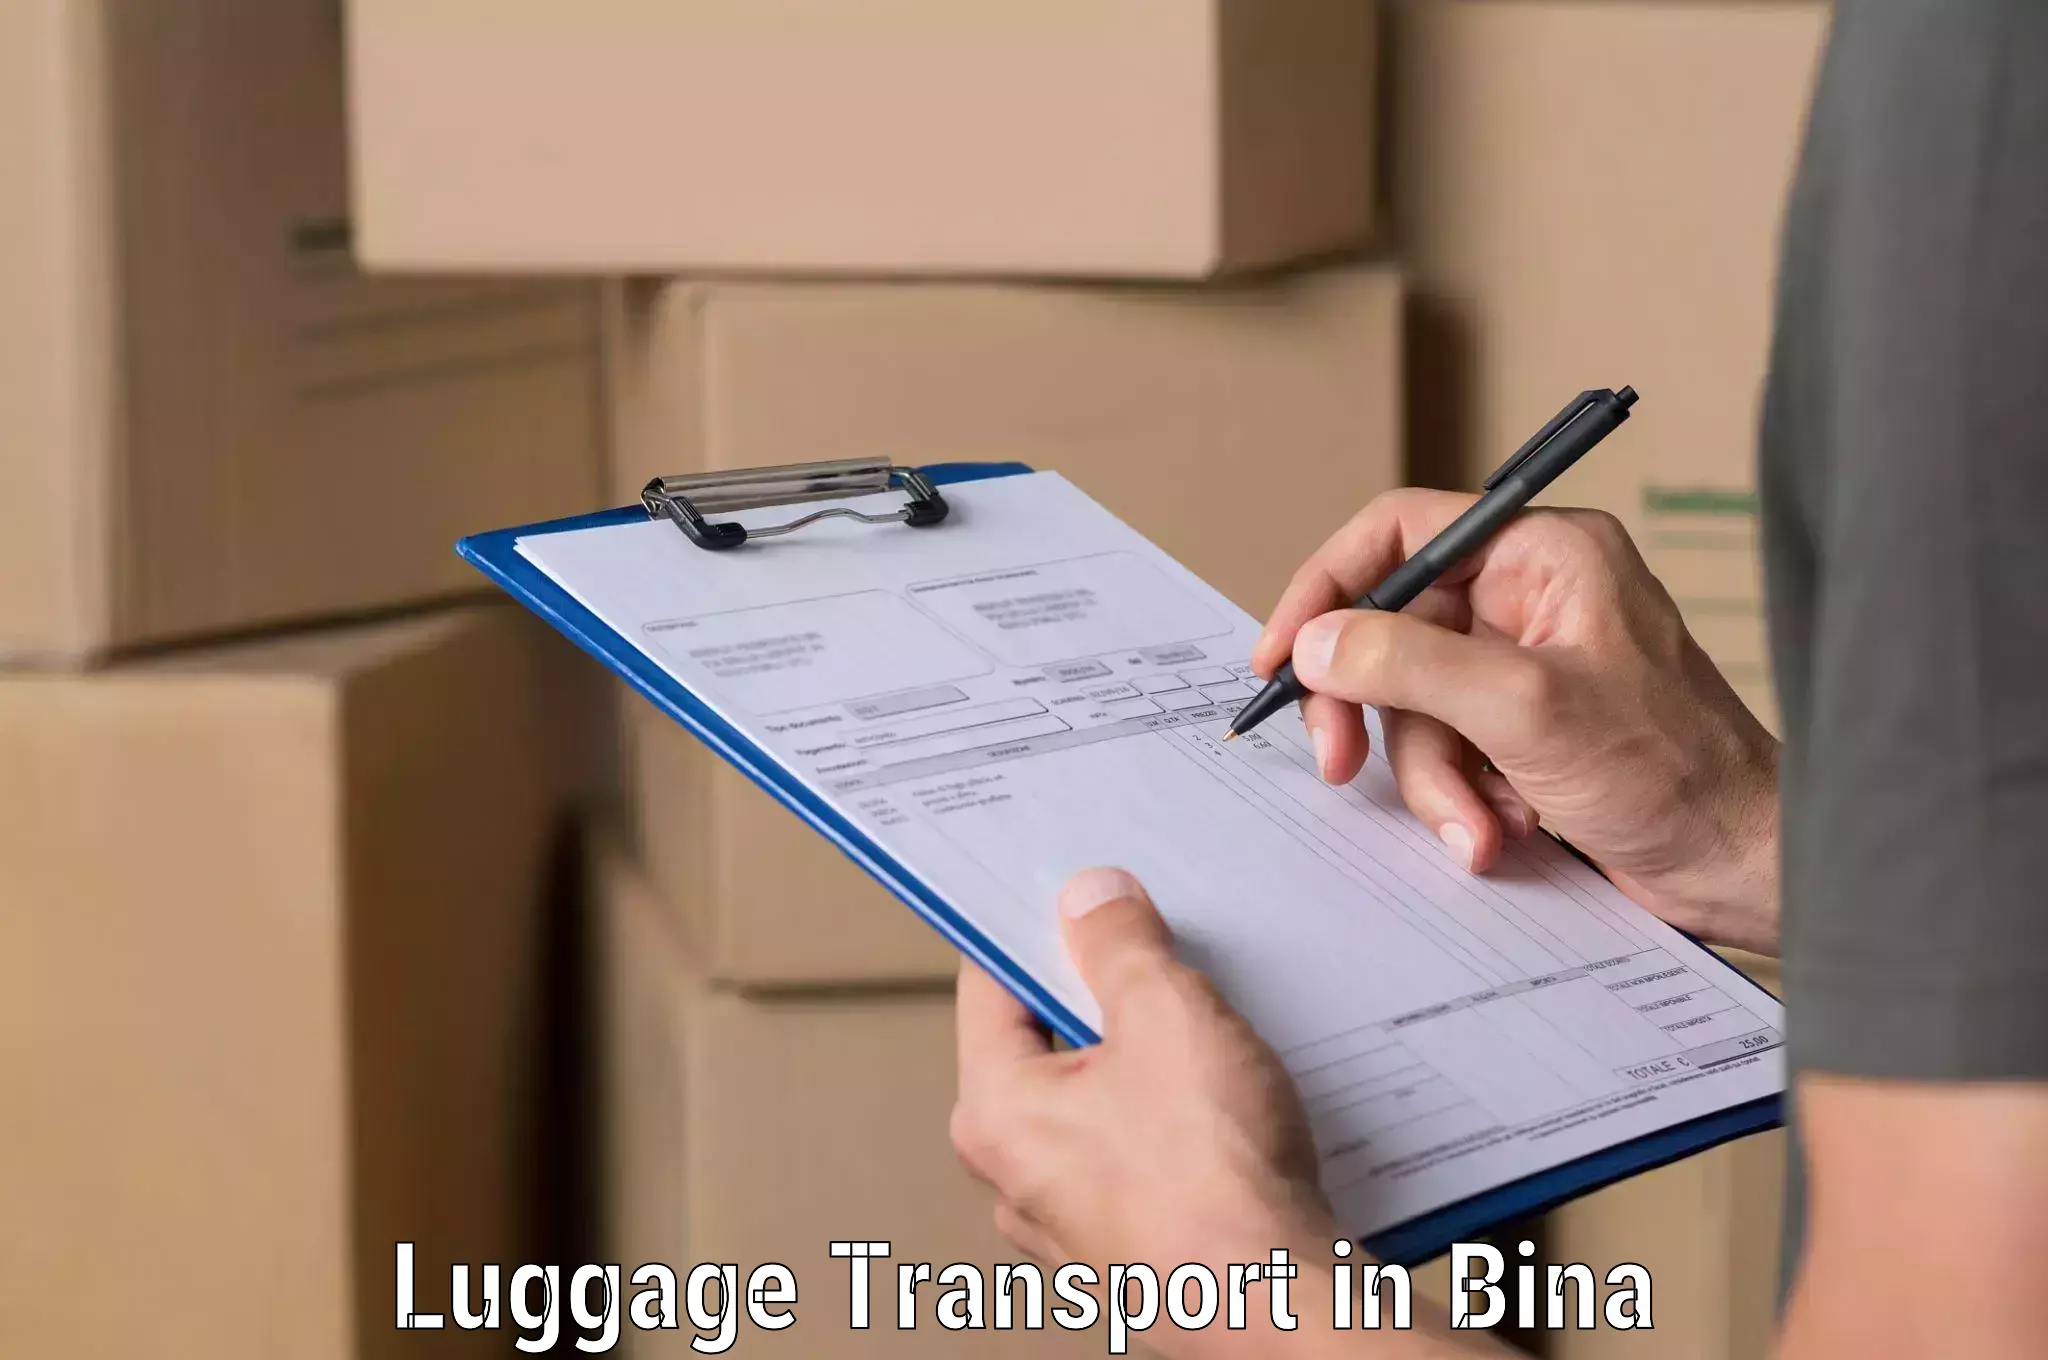 Baggage relocation service in Bina